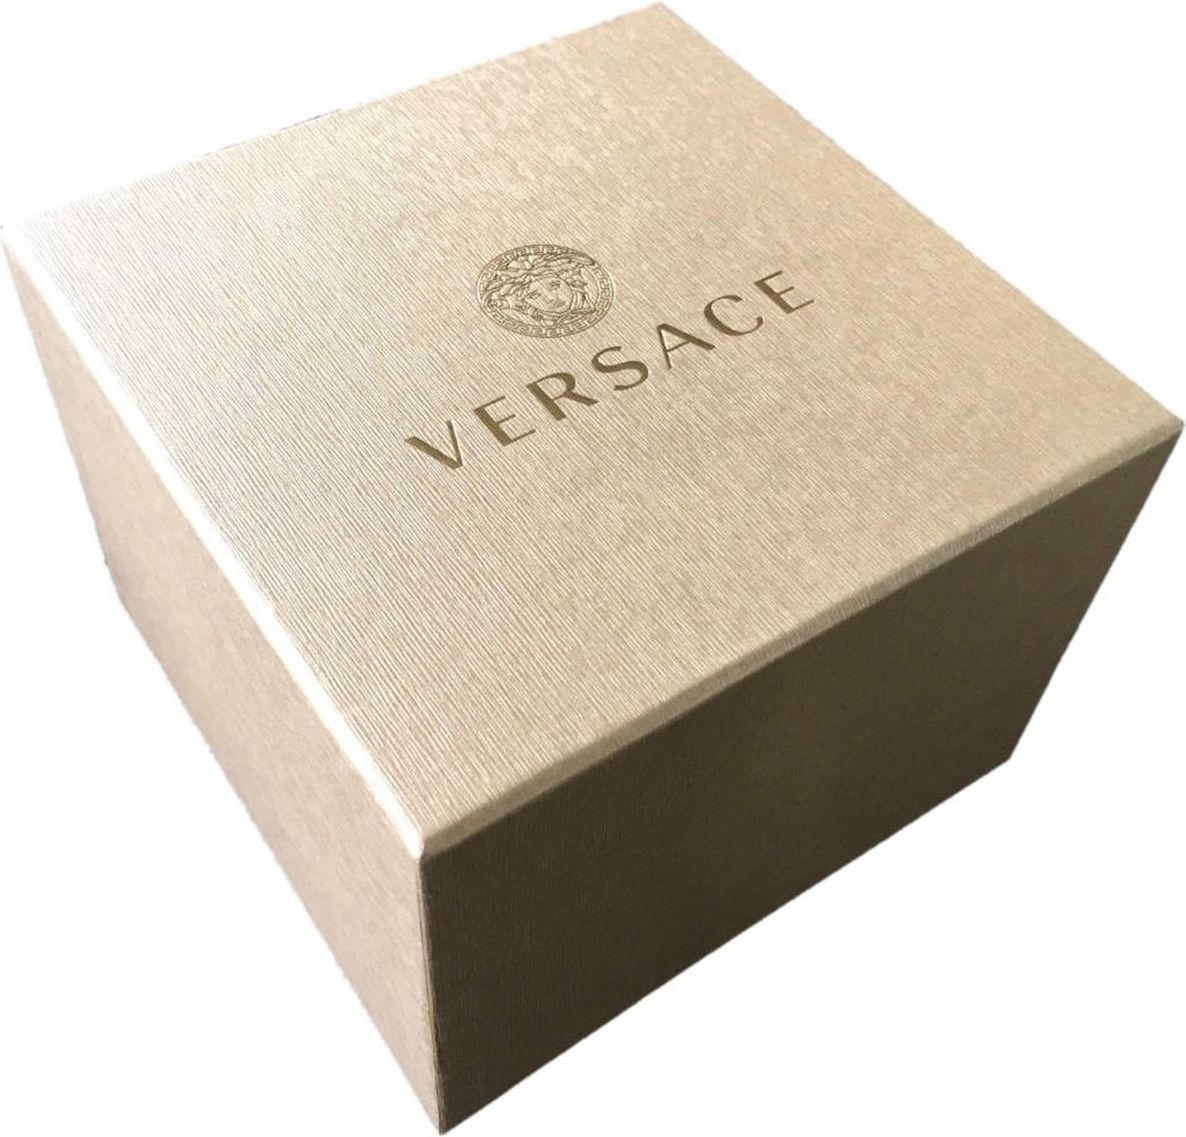 Versace VE2E00521 New Chrono horloge 45 mm Zilver